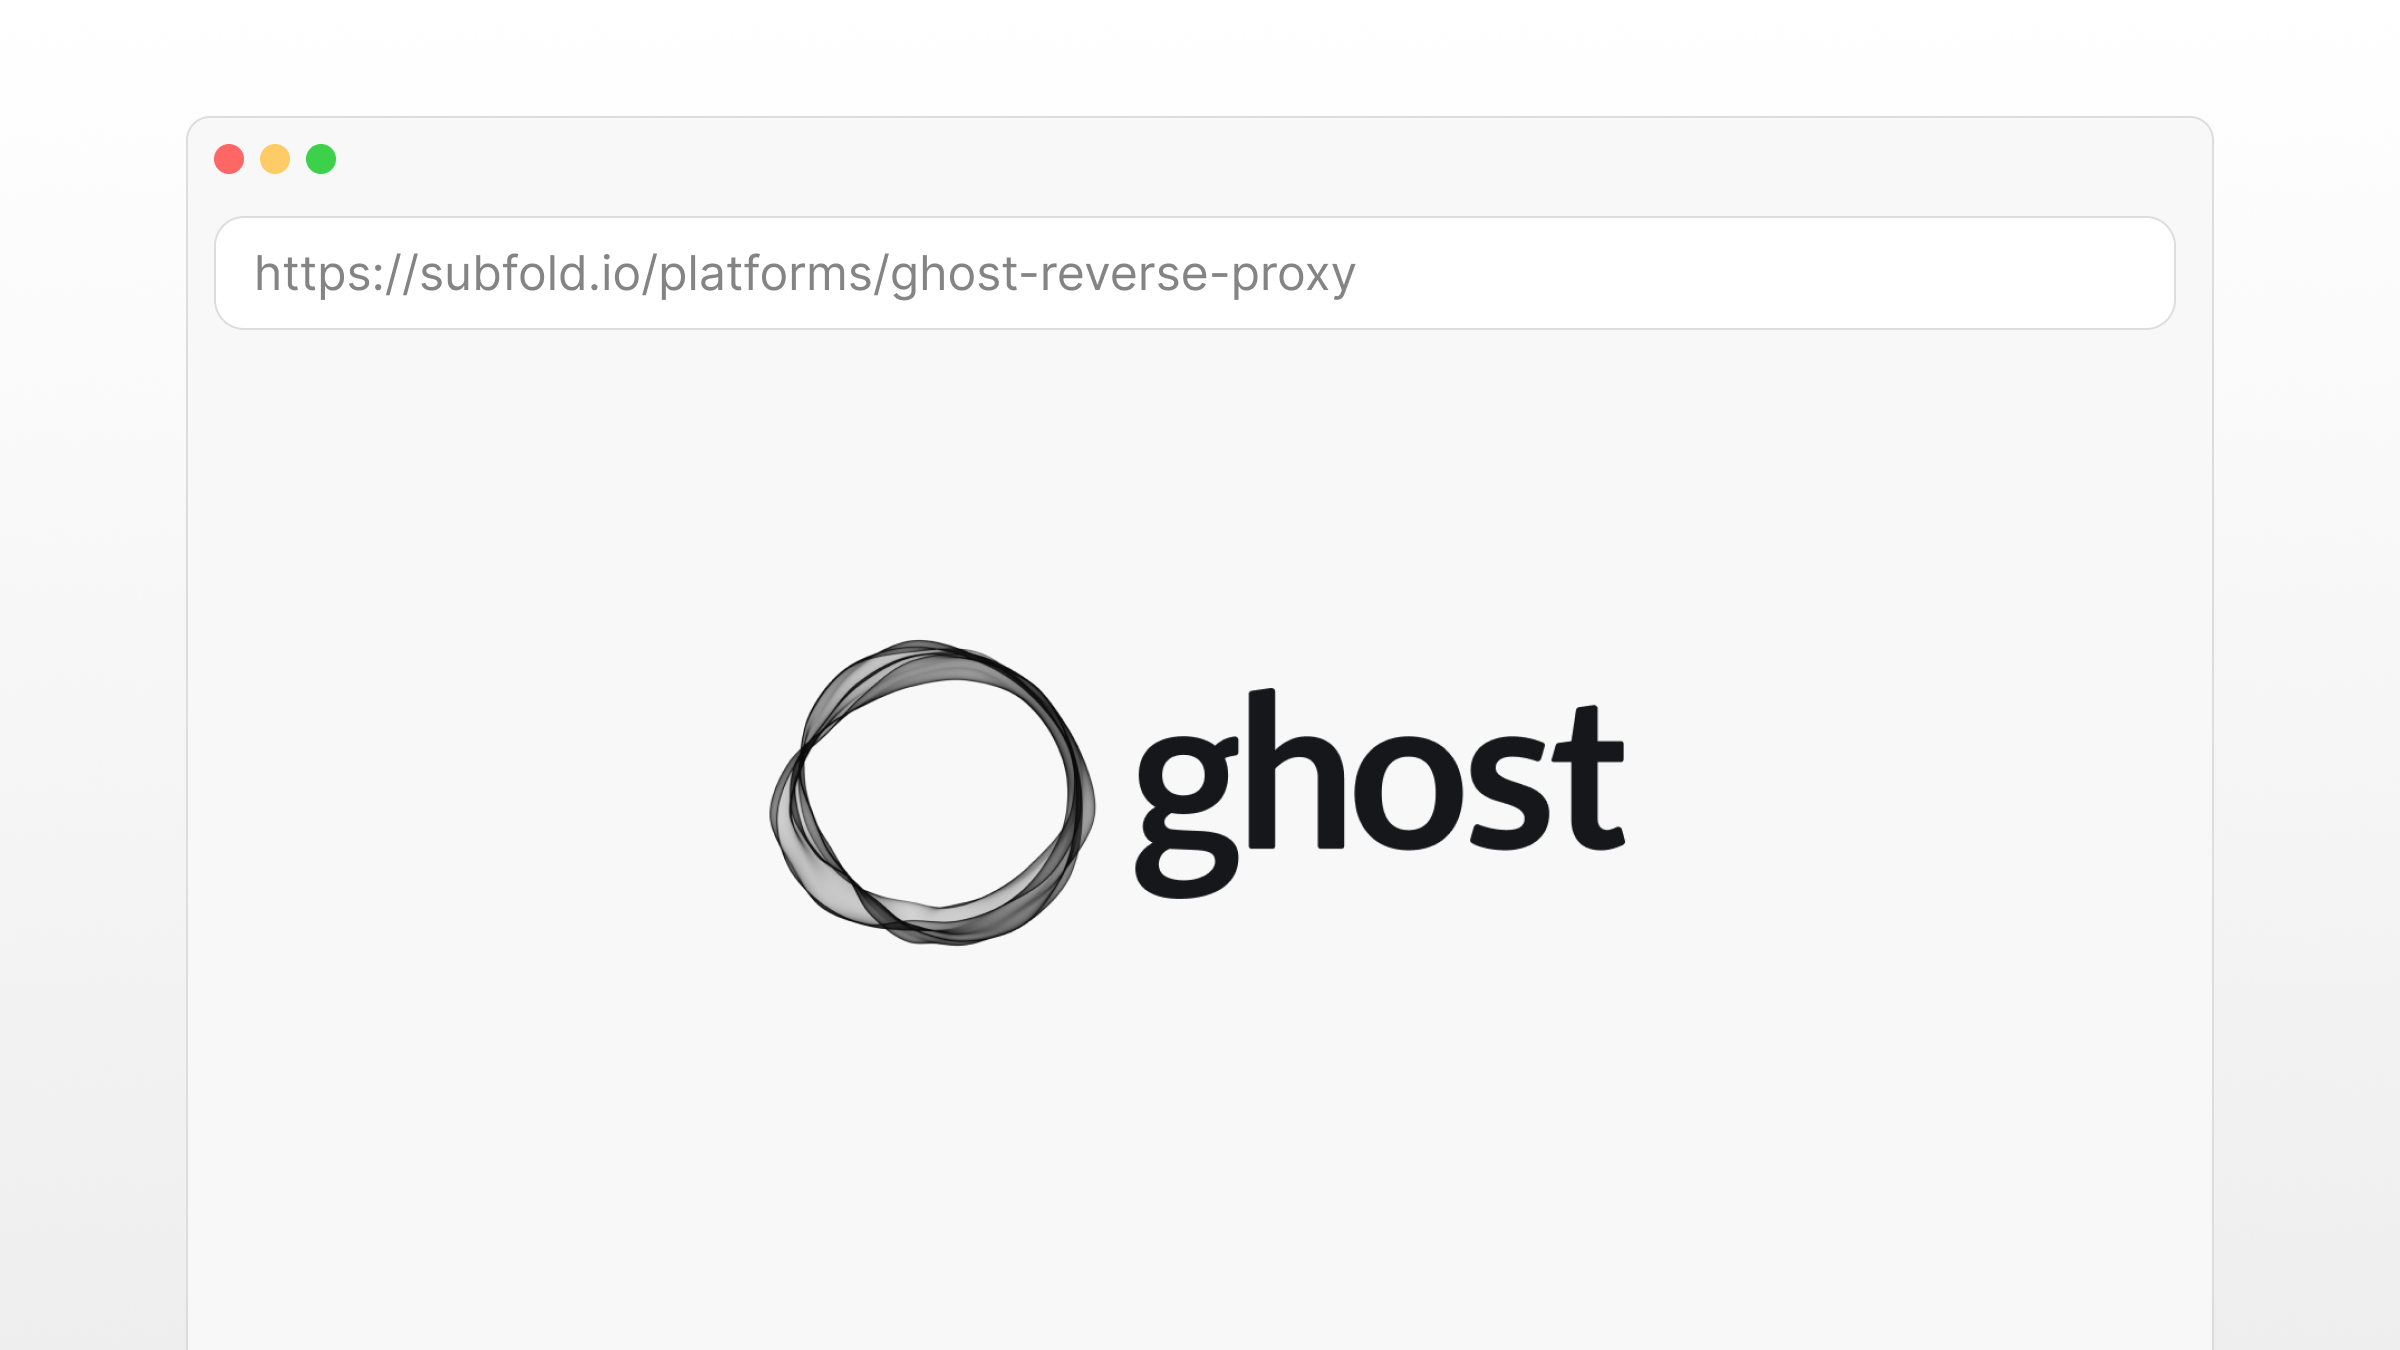 ghost blog logo